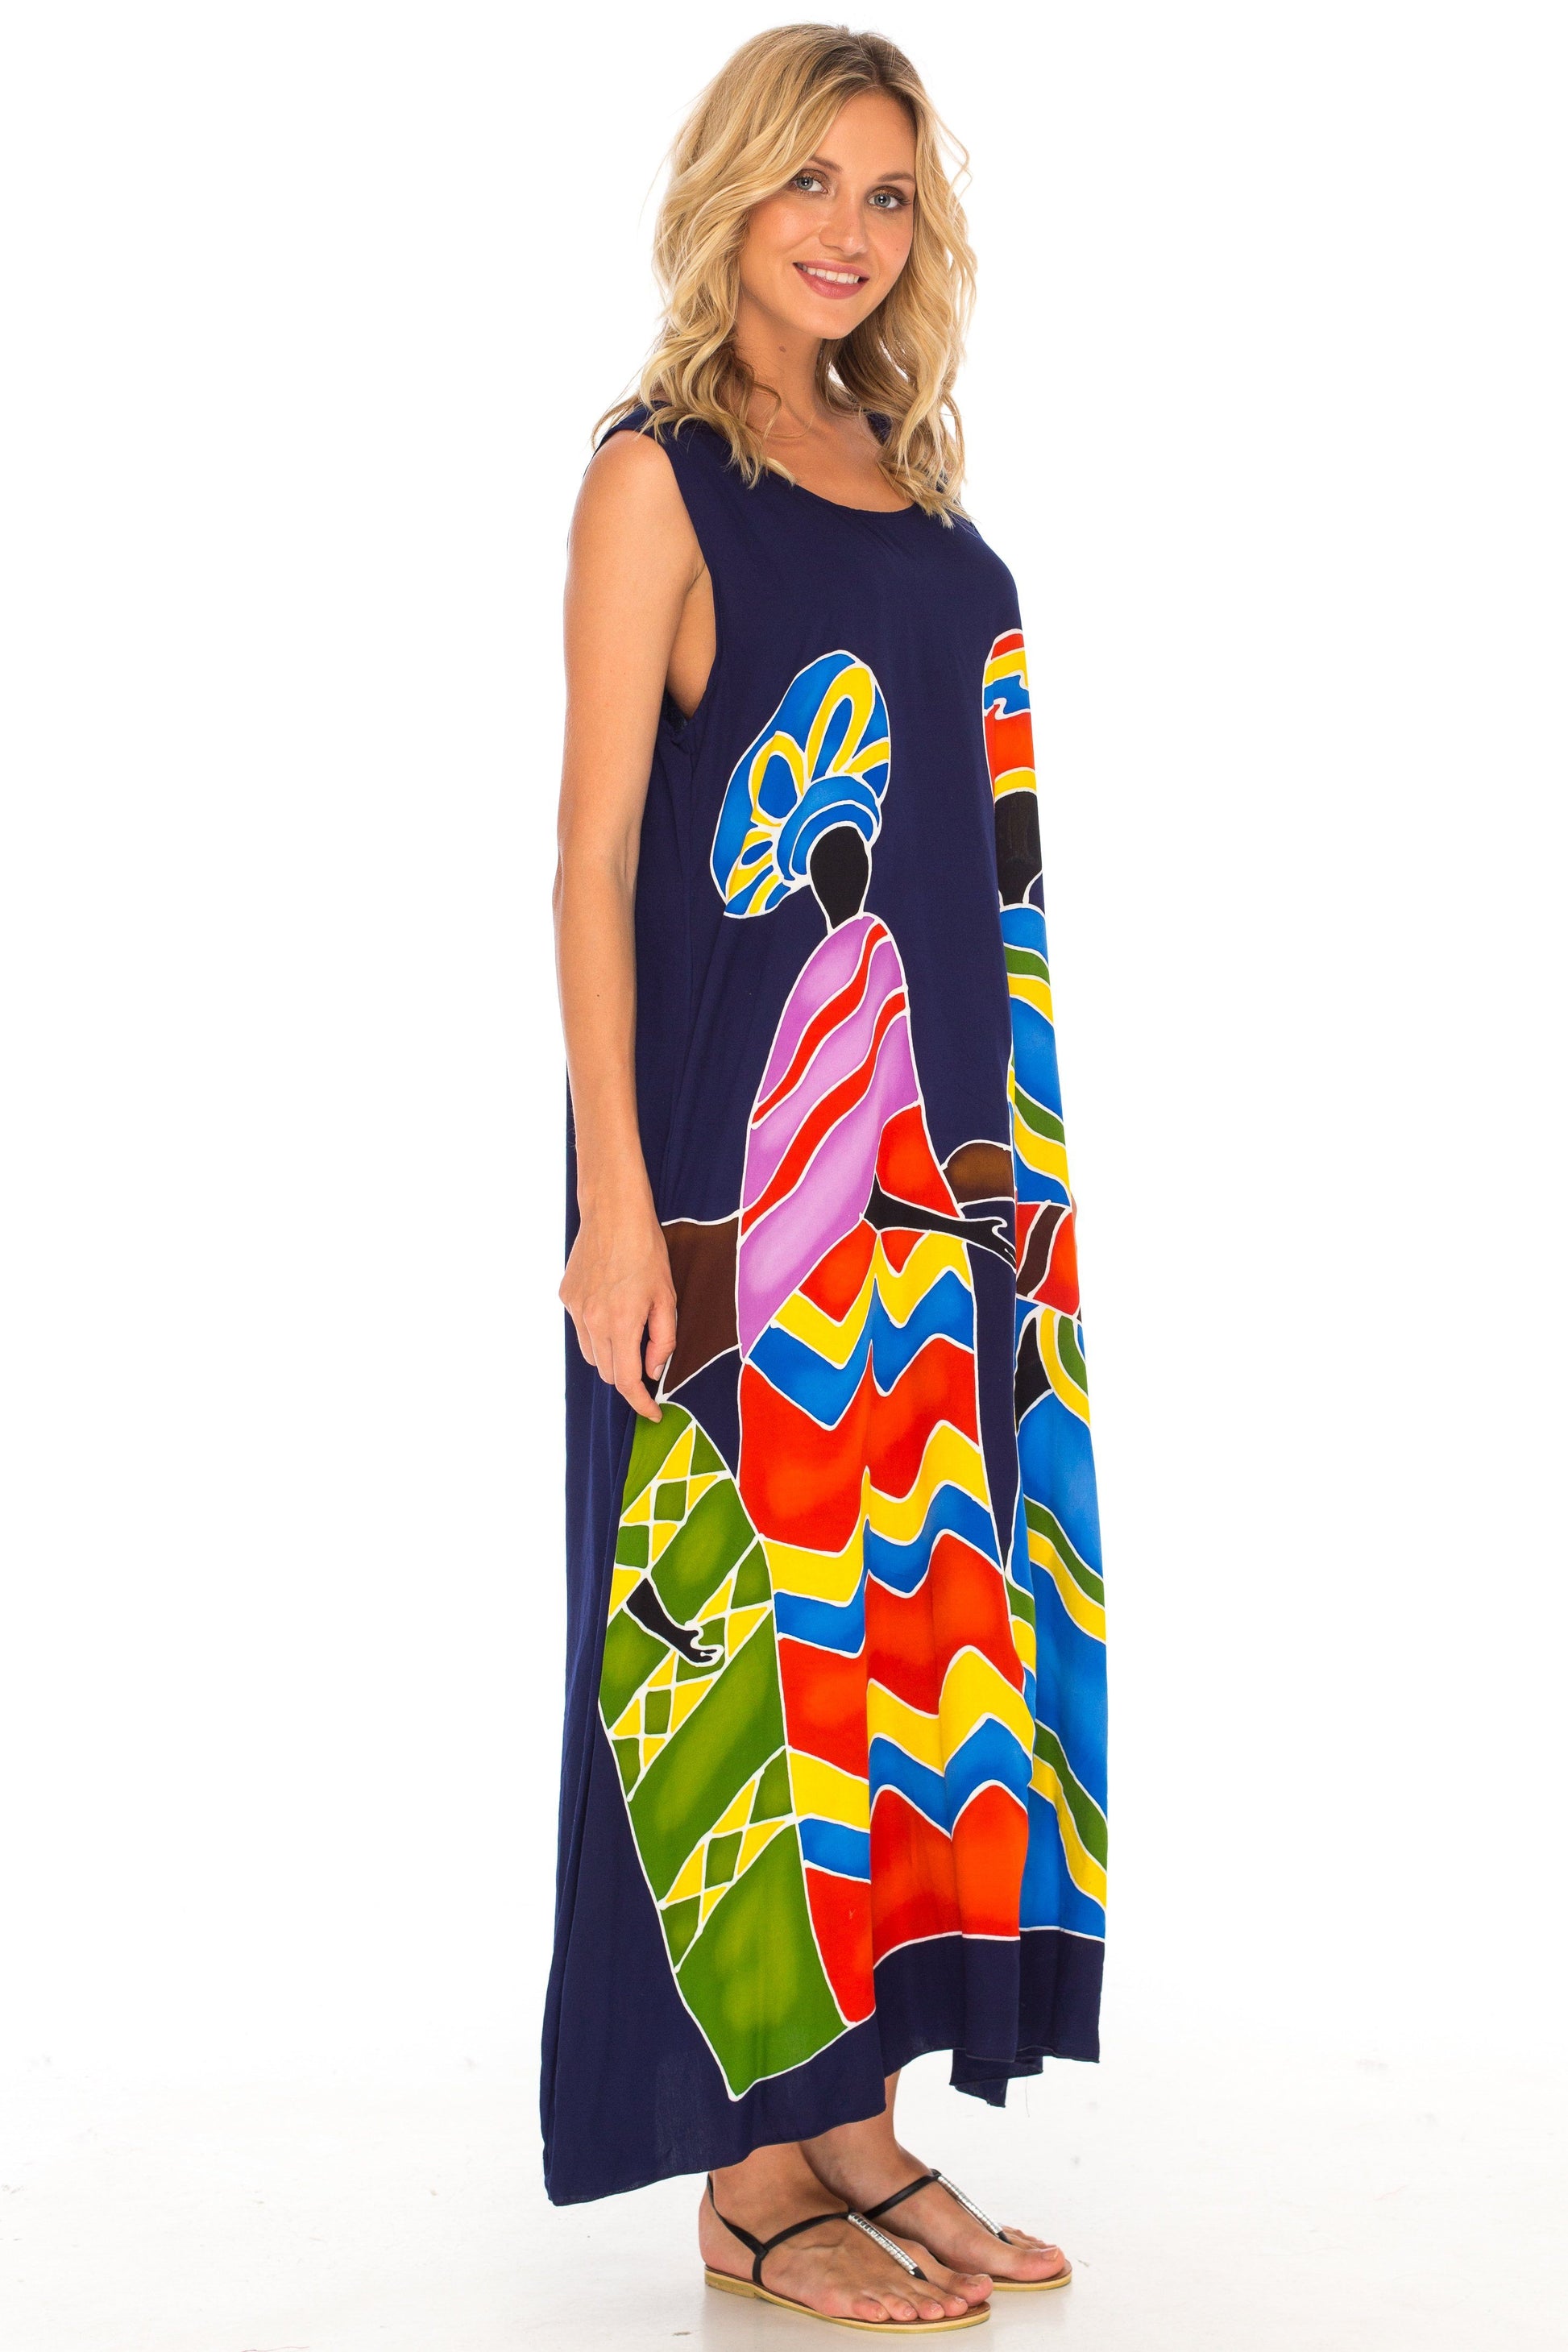 Sleeveless Summer Tank Dress with Hand-painted Tribal Design - Love-ShuShi-Navy blue dress